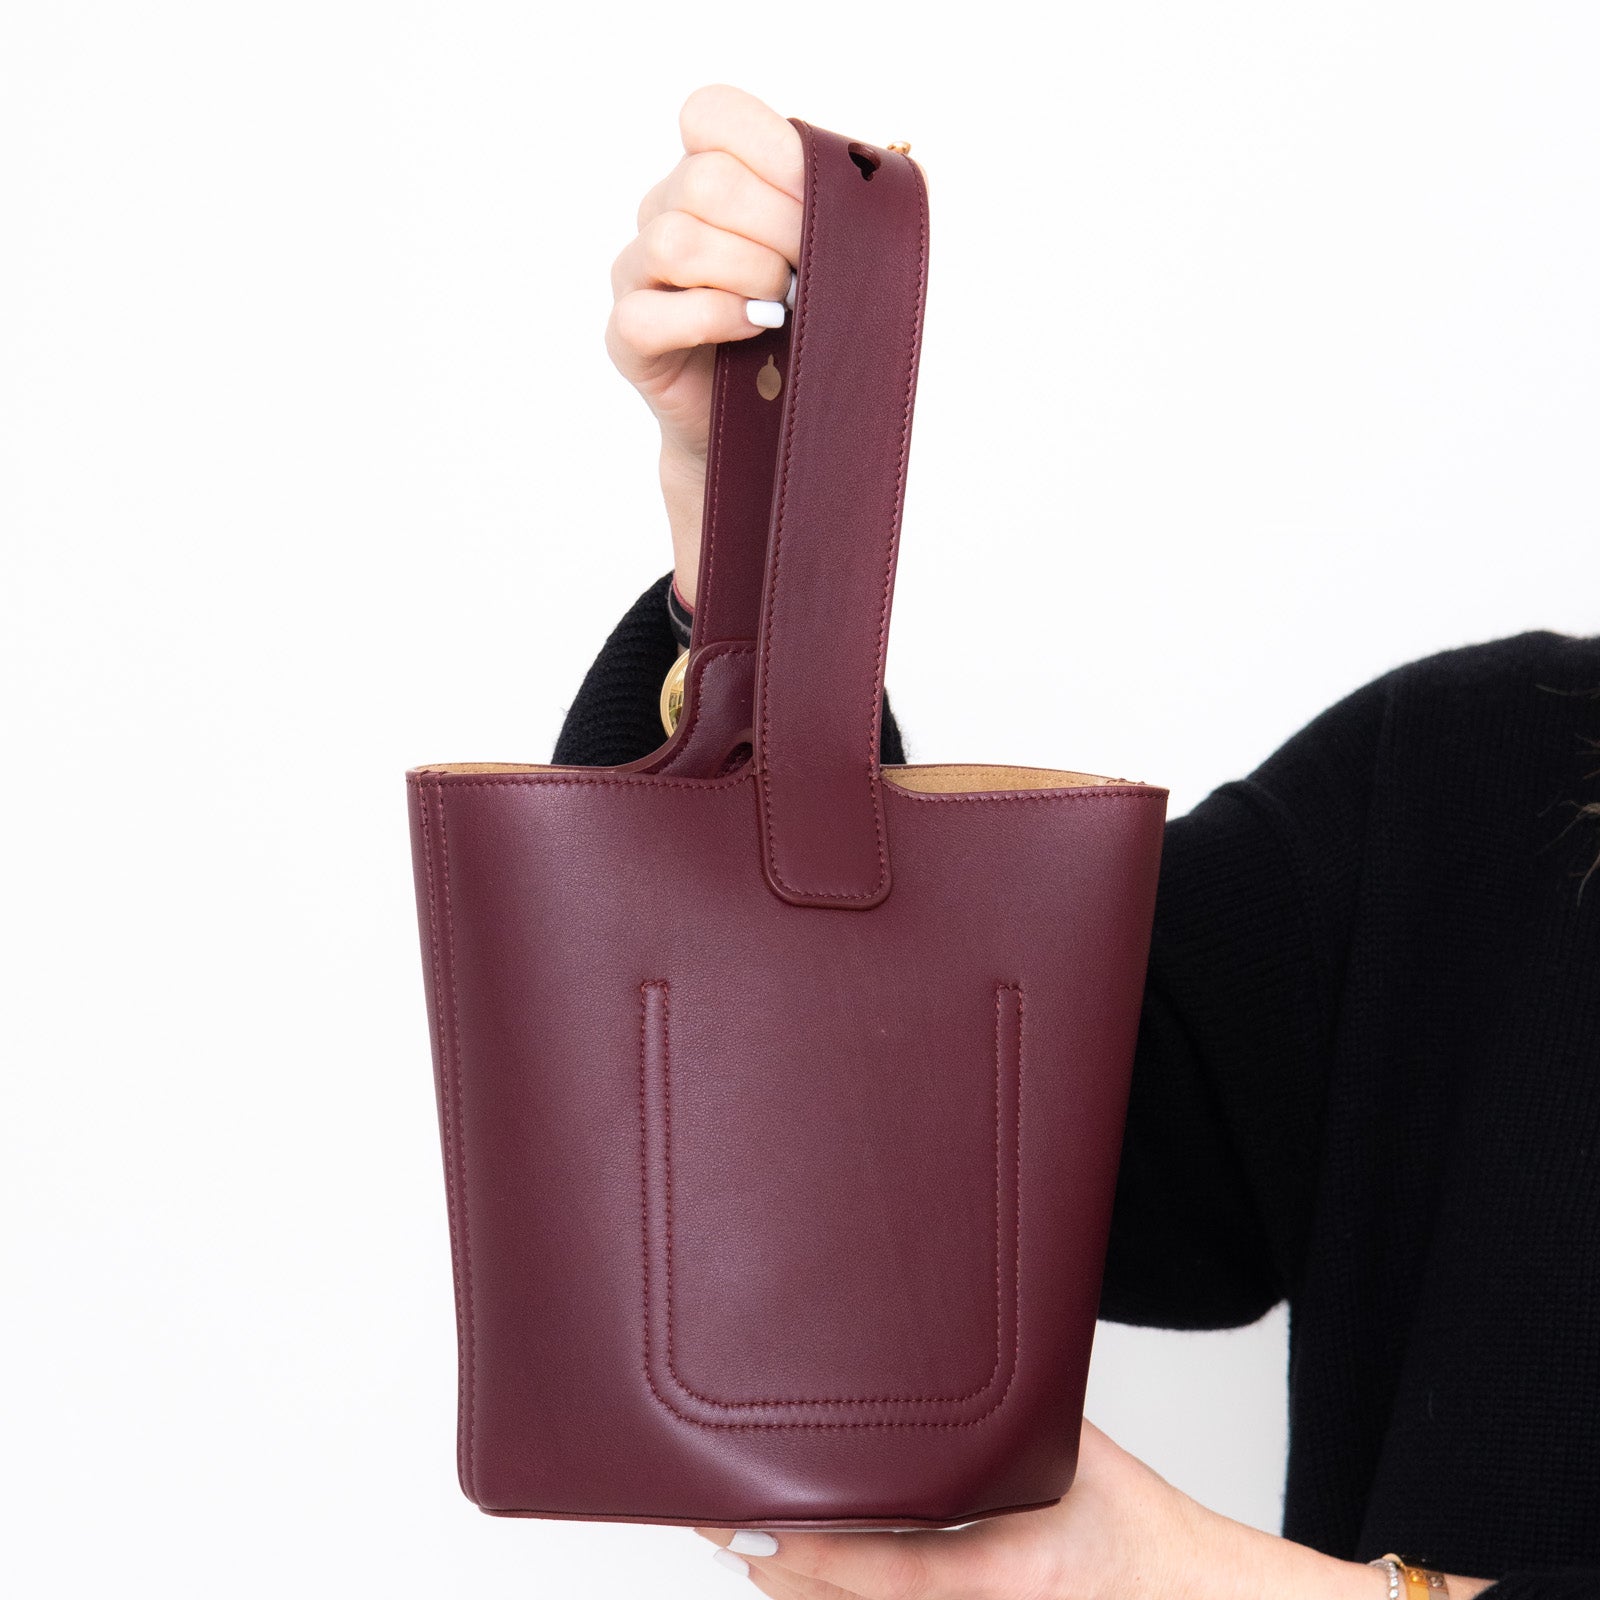 Loewe Burgundy Pebble Leather Bag - Image 6 of 8